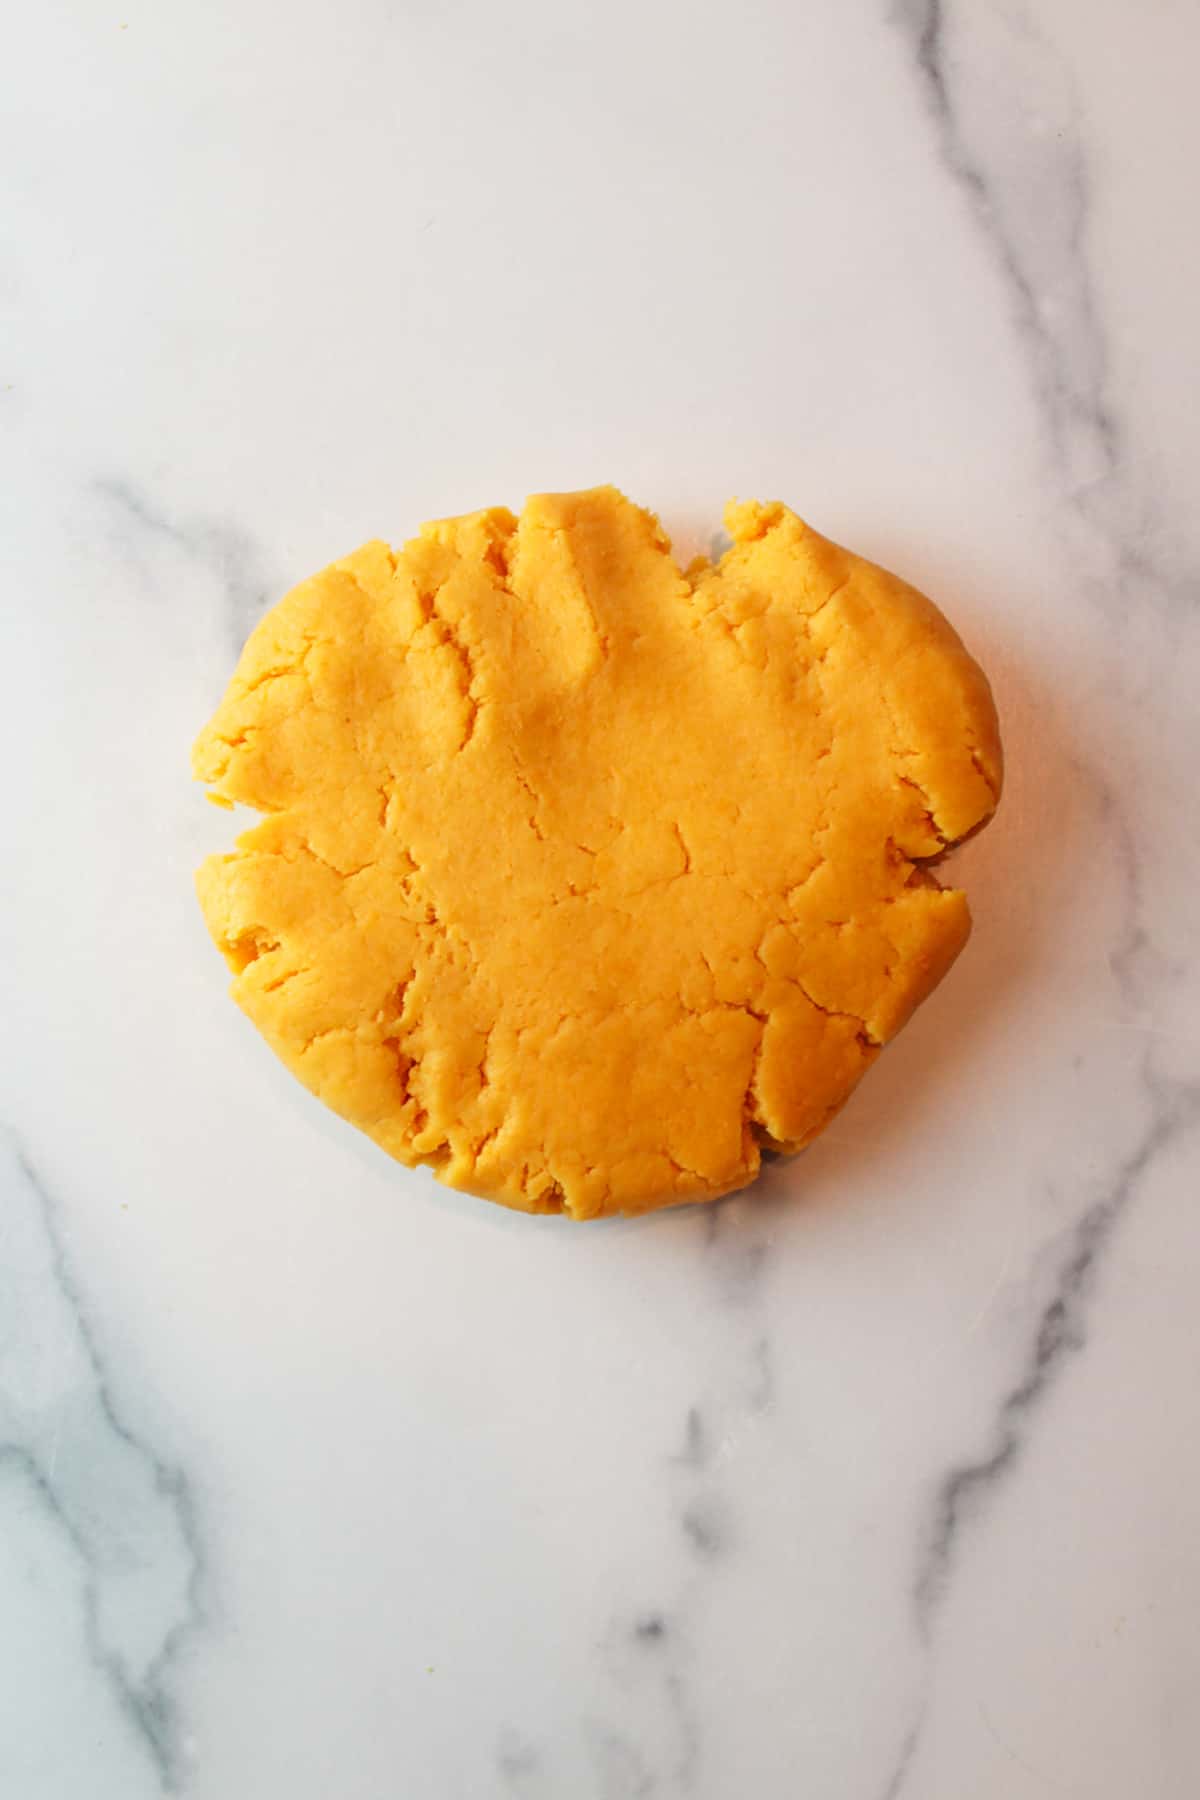 cheese cracker dough pressed onto a counter.